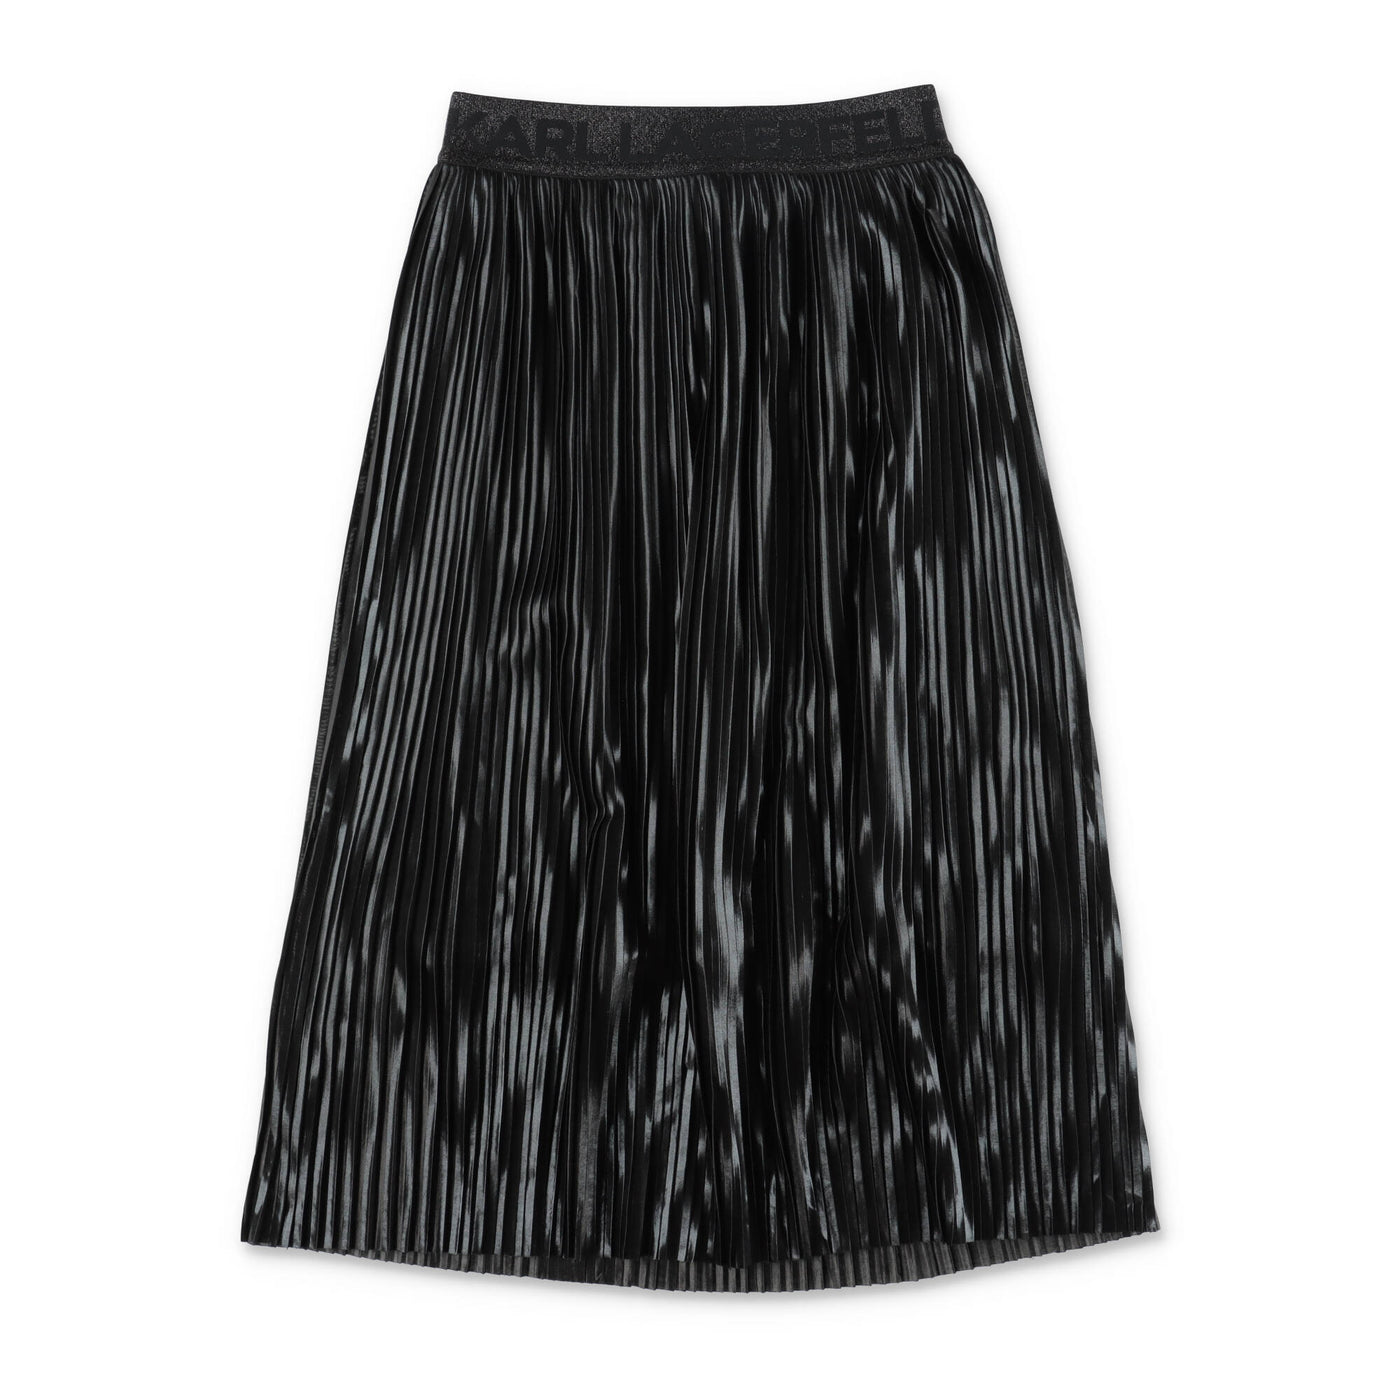 Metal black techno fabric pleated girl KARL LAGERFELD skirt | Carofiglio Junior